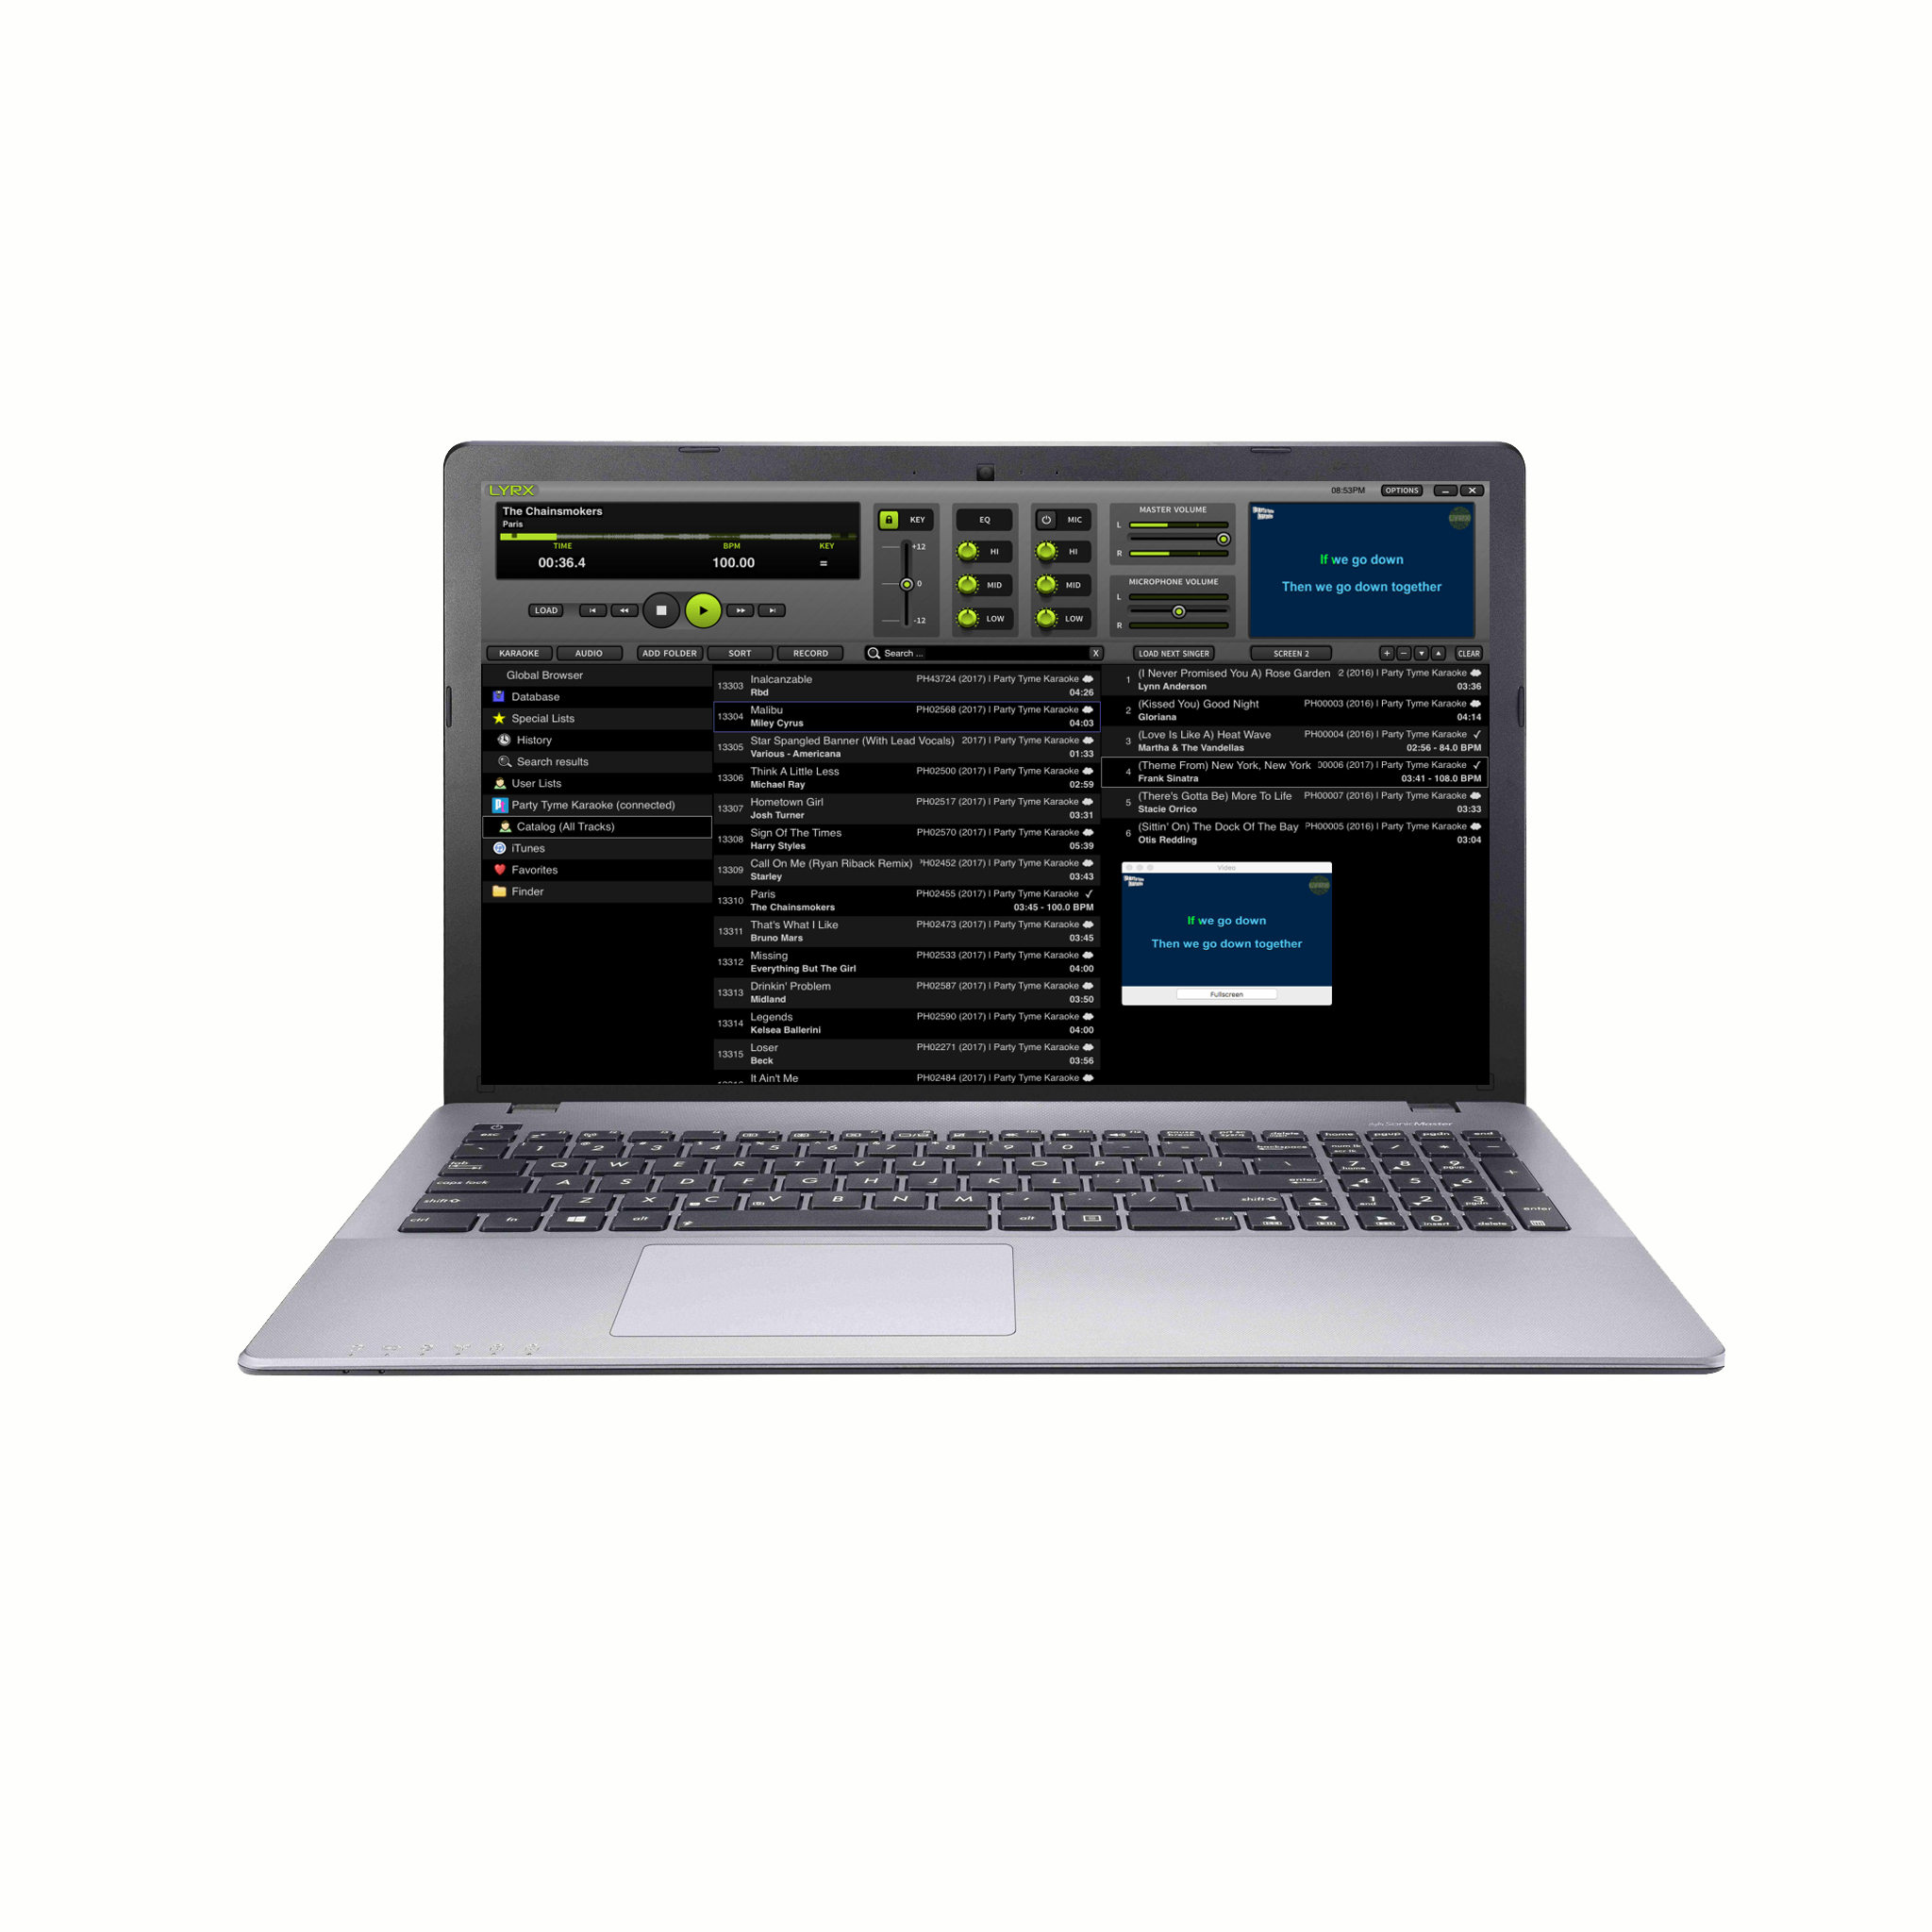 Karaoke Laptop with software and 1,000 Free Karaoke songs.